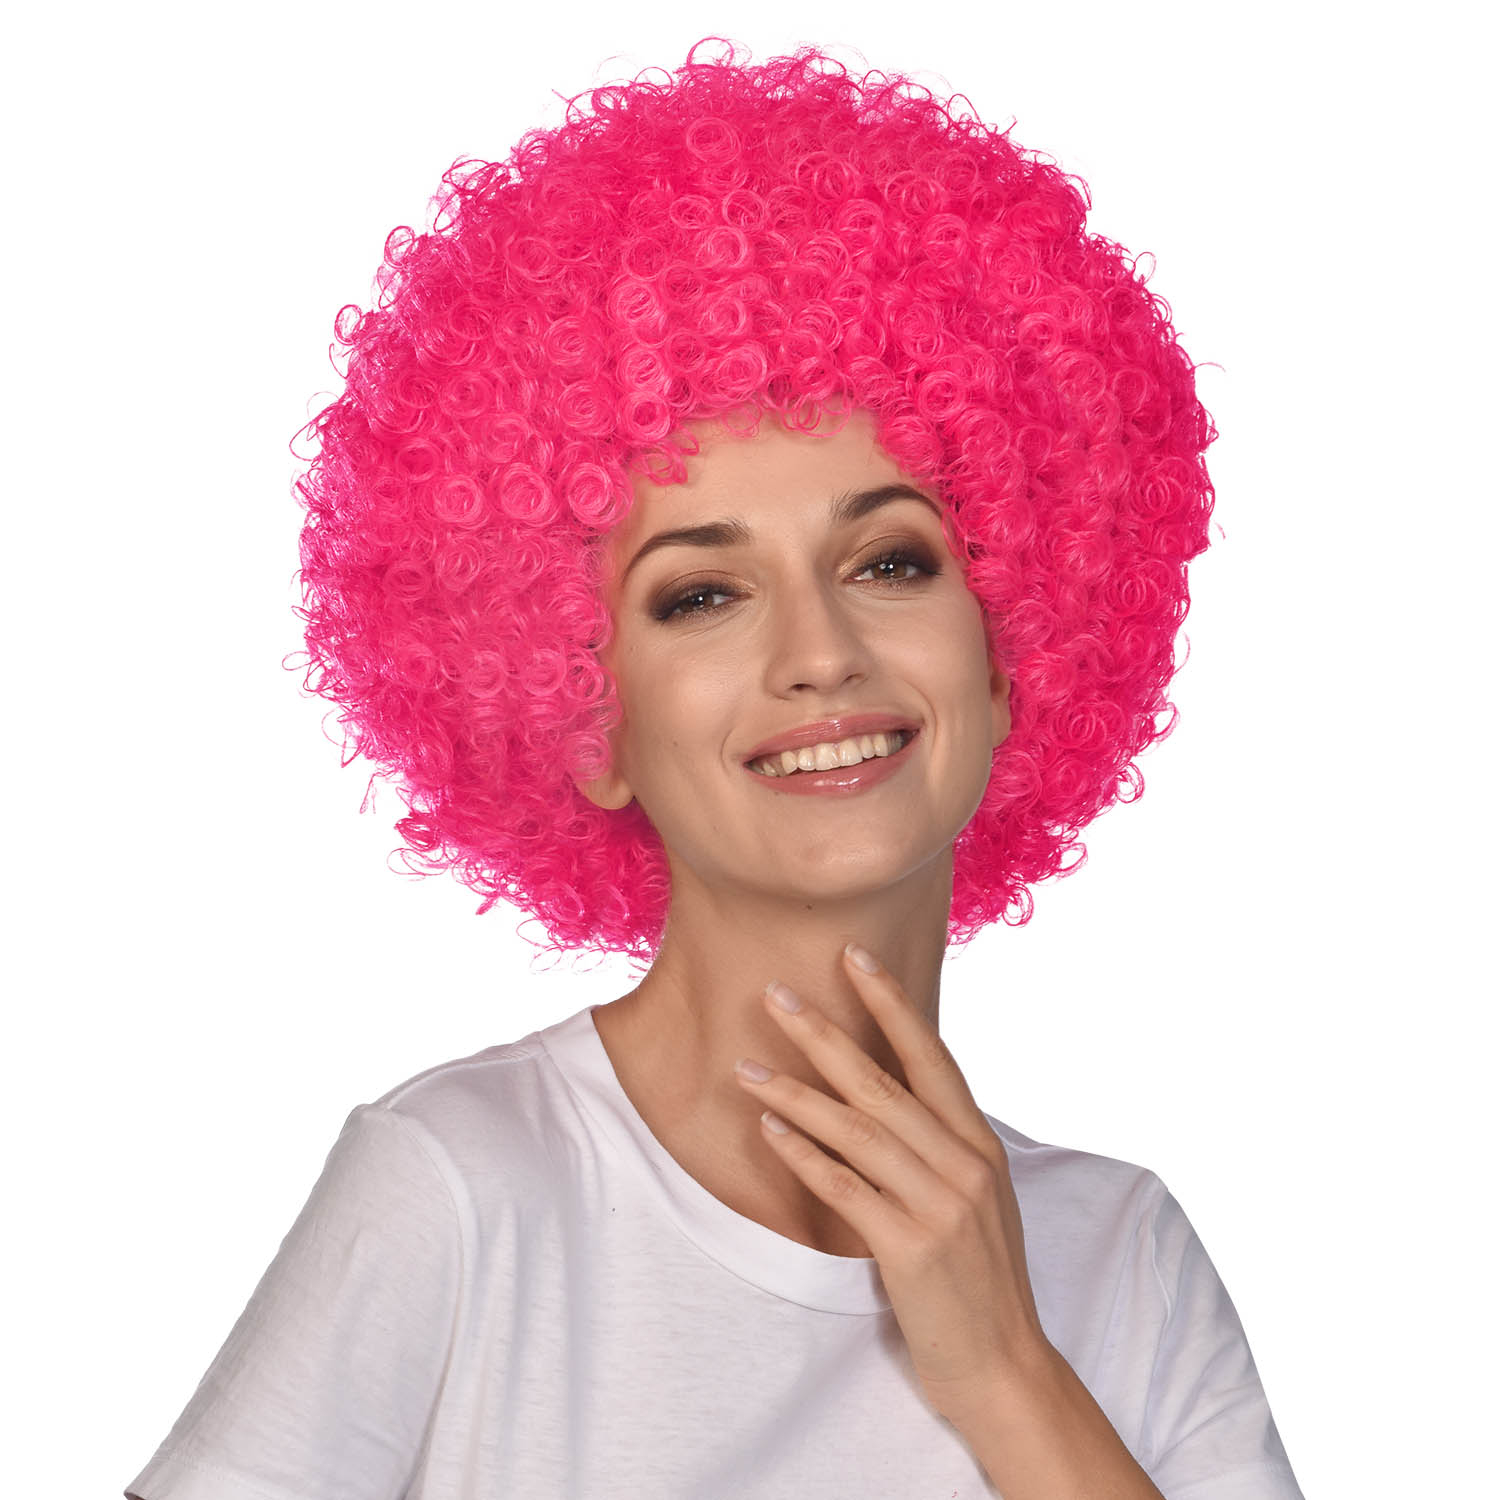 Pink Afro Wigs - 6 PC : Amscan International